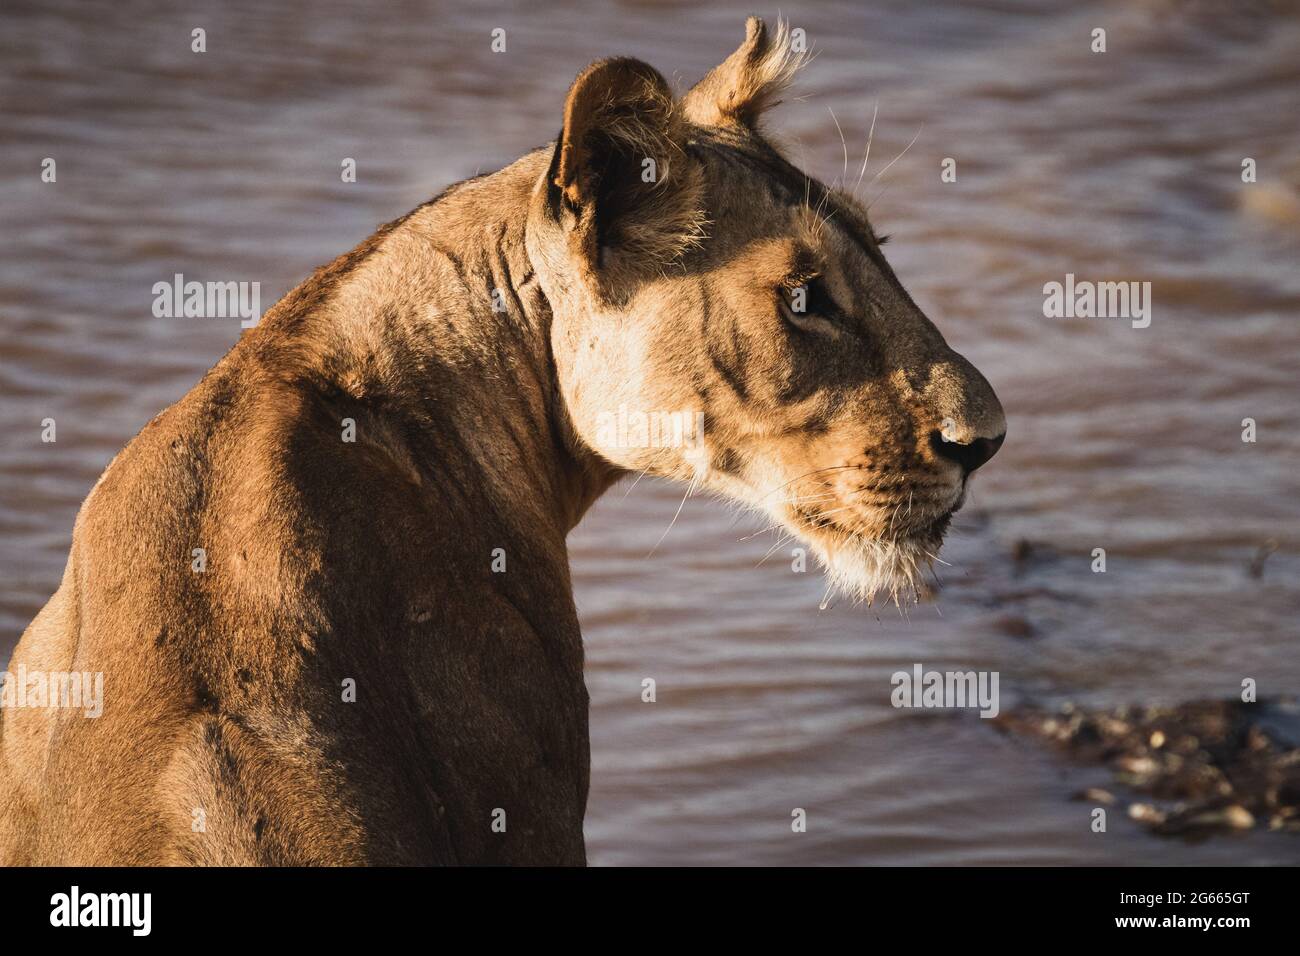 Animals in the wild - lioness drinking at the river - Samburu National Reserve, North Kenya Stock Photo